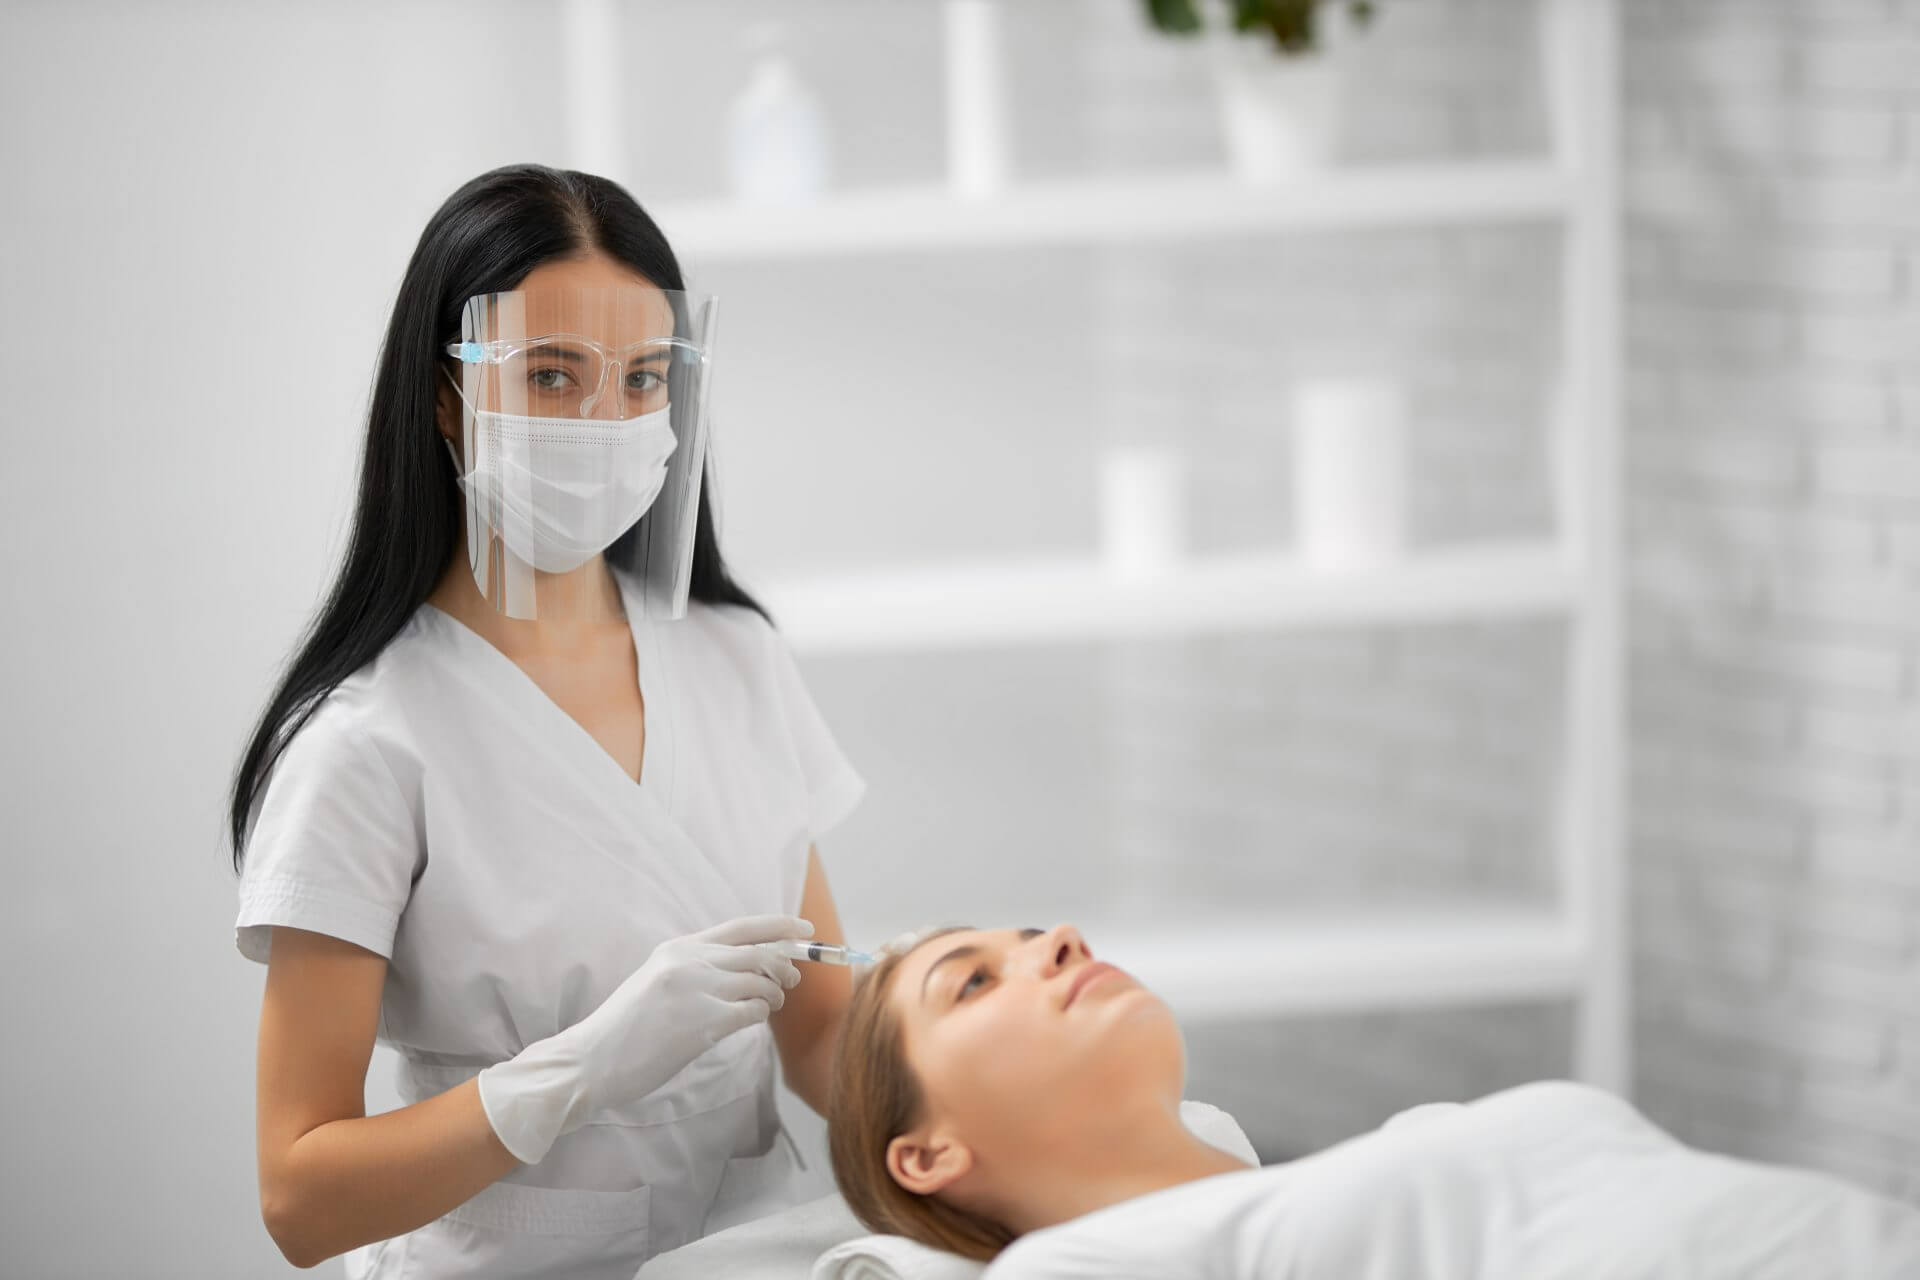 Non-surgical procedure in beauty salon